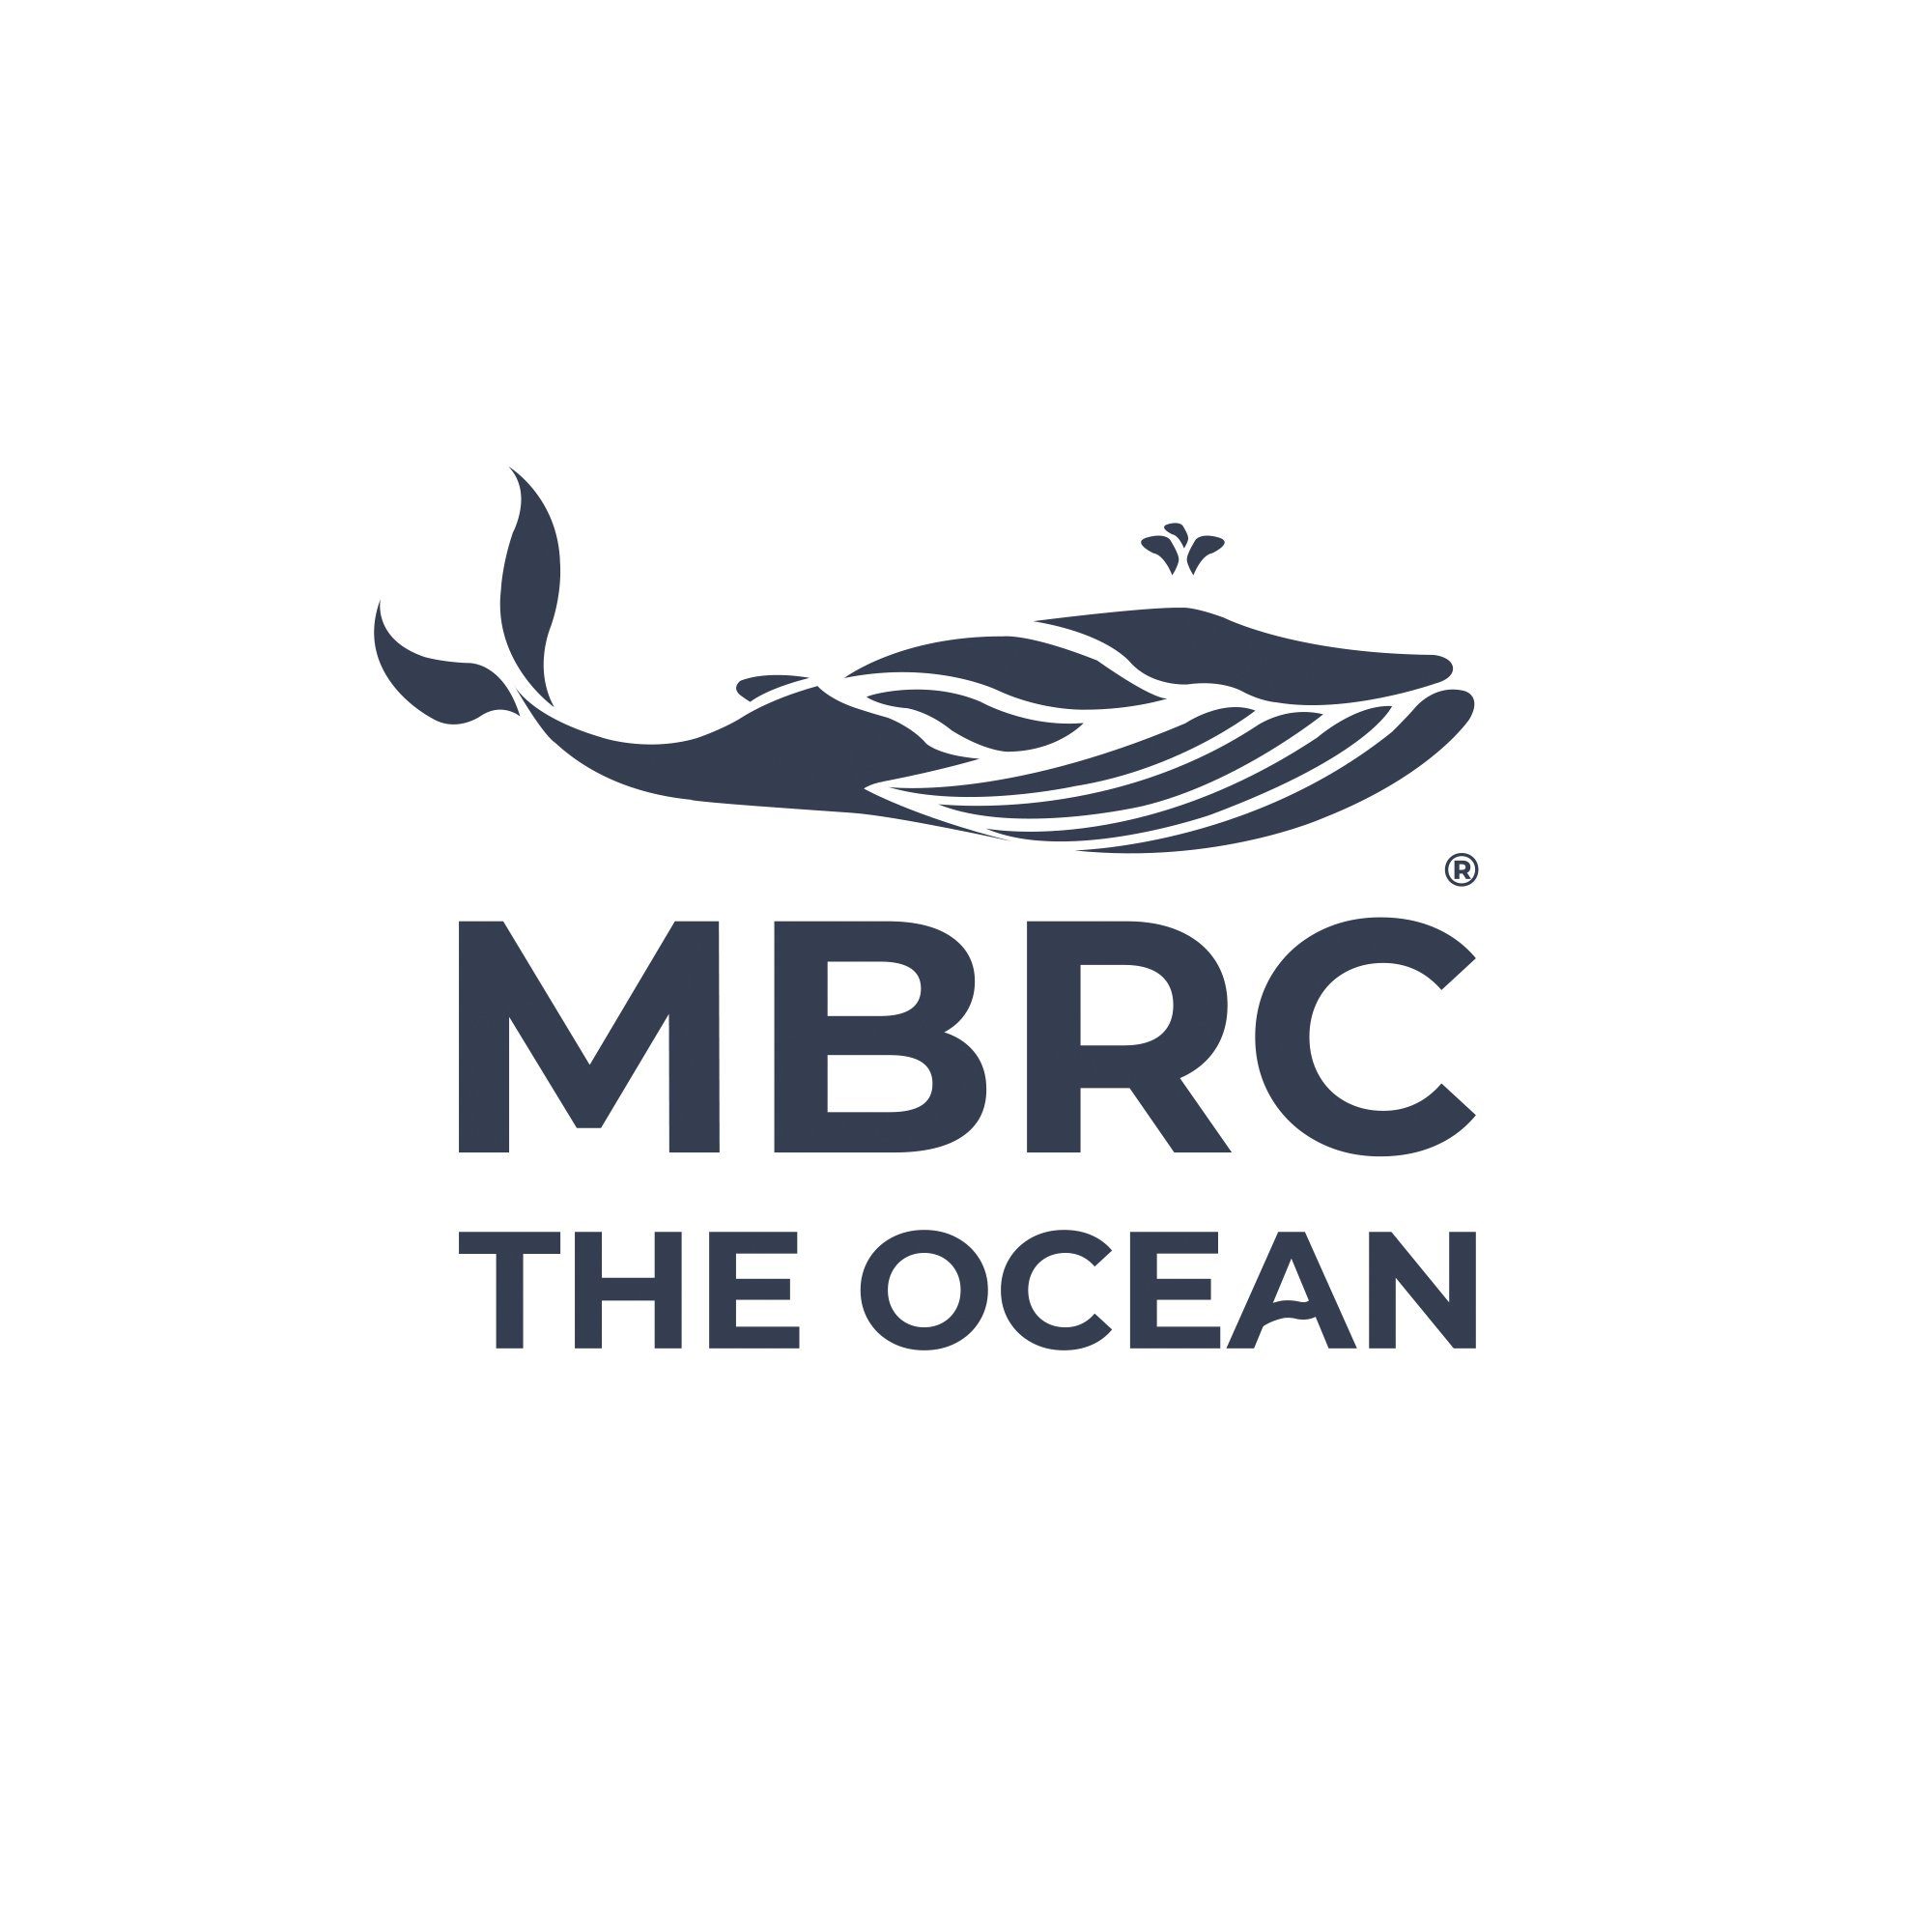 MBRC the ocean